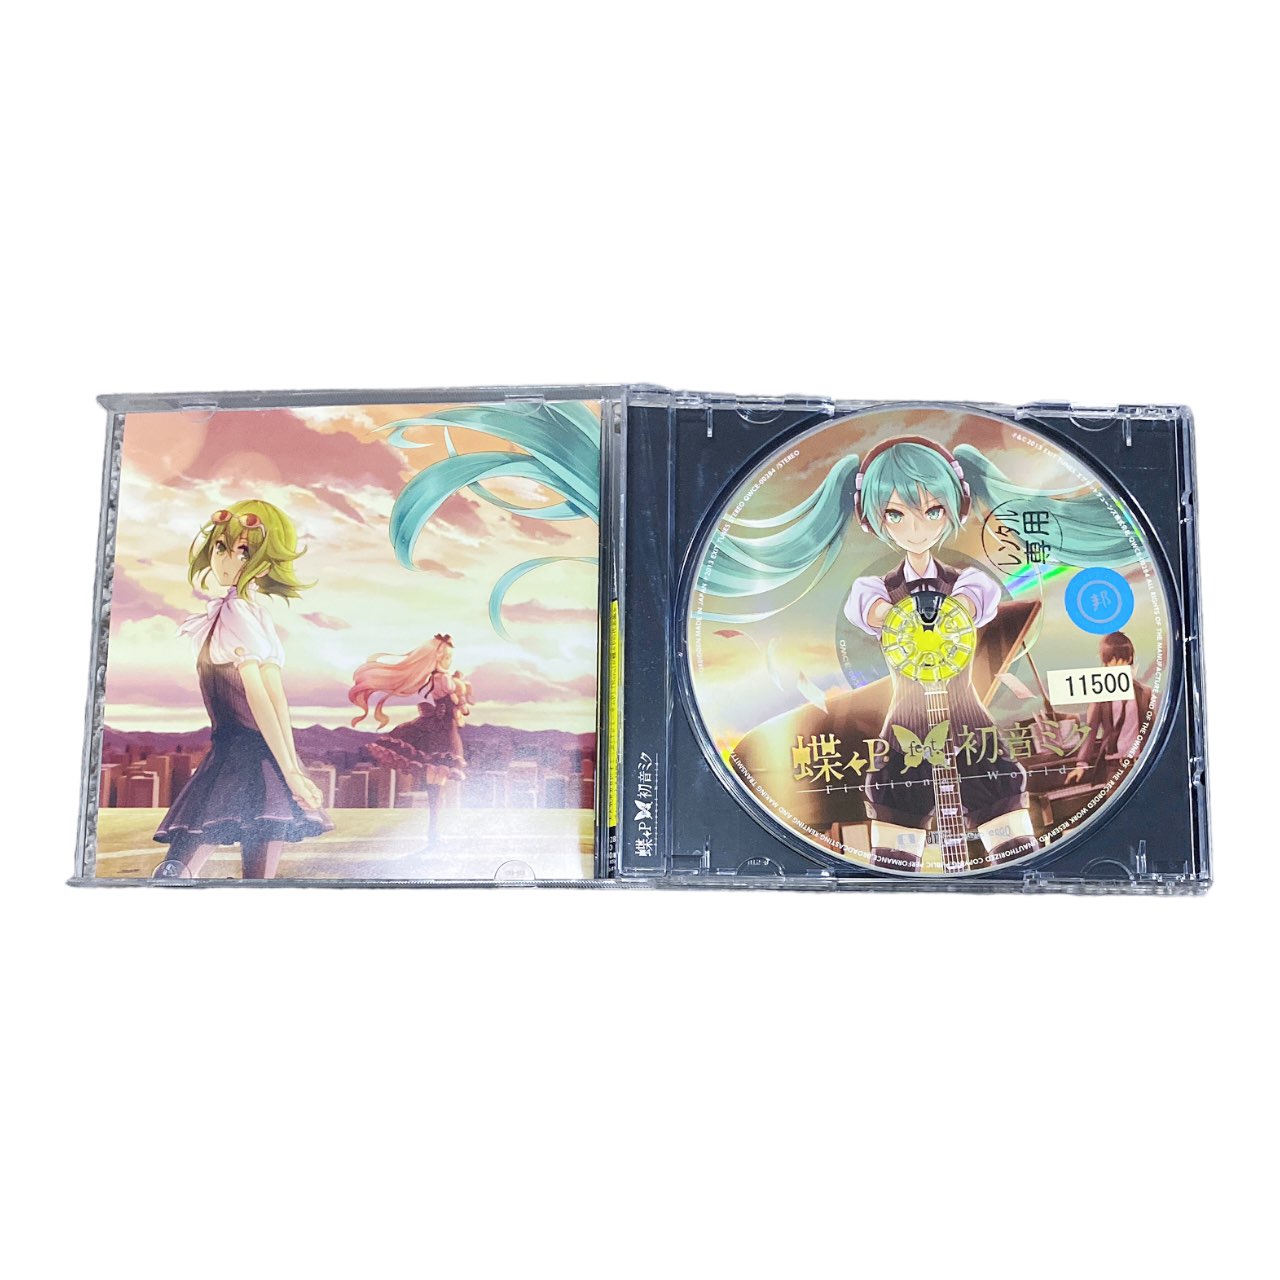 2013 Hatsune Miku Fictional World CD